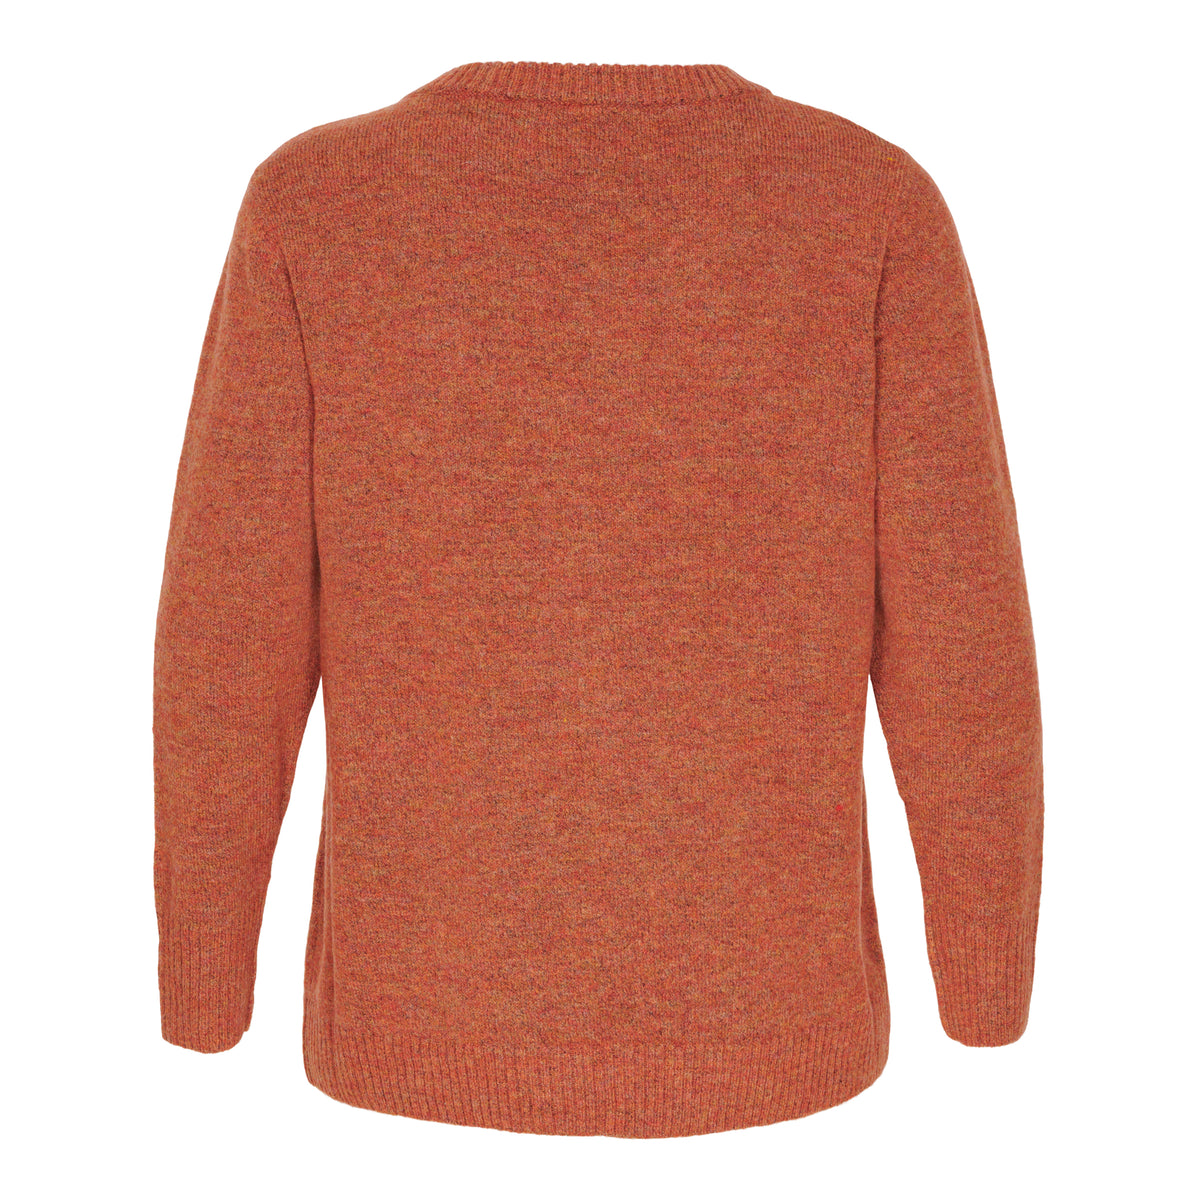 NO. 1 BY OX Finstrikket sweater Sweaters Brun